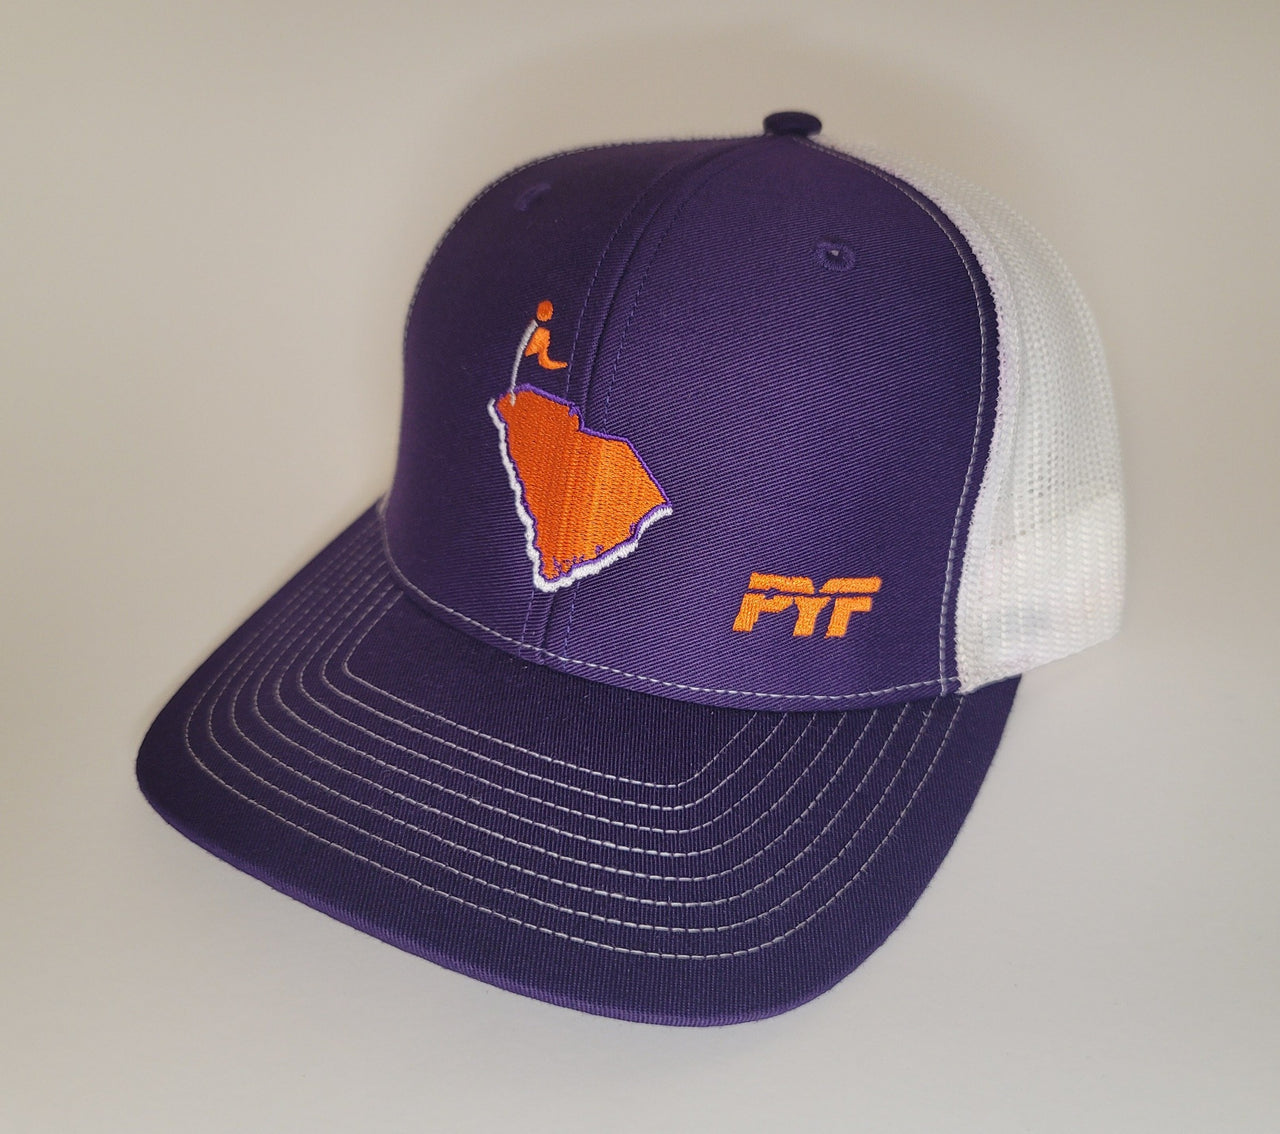 CXII Mesh Hat - Clemson, South Carolina - (Orange State/Purple-White)